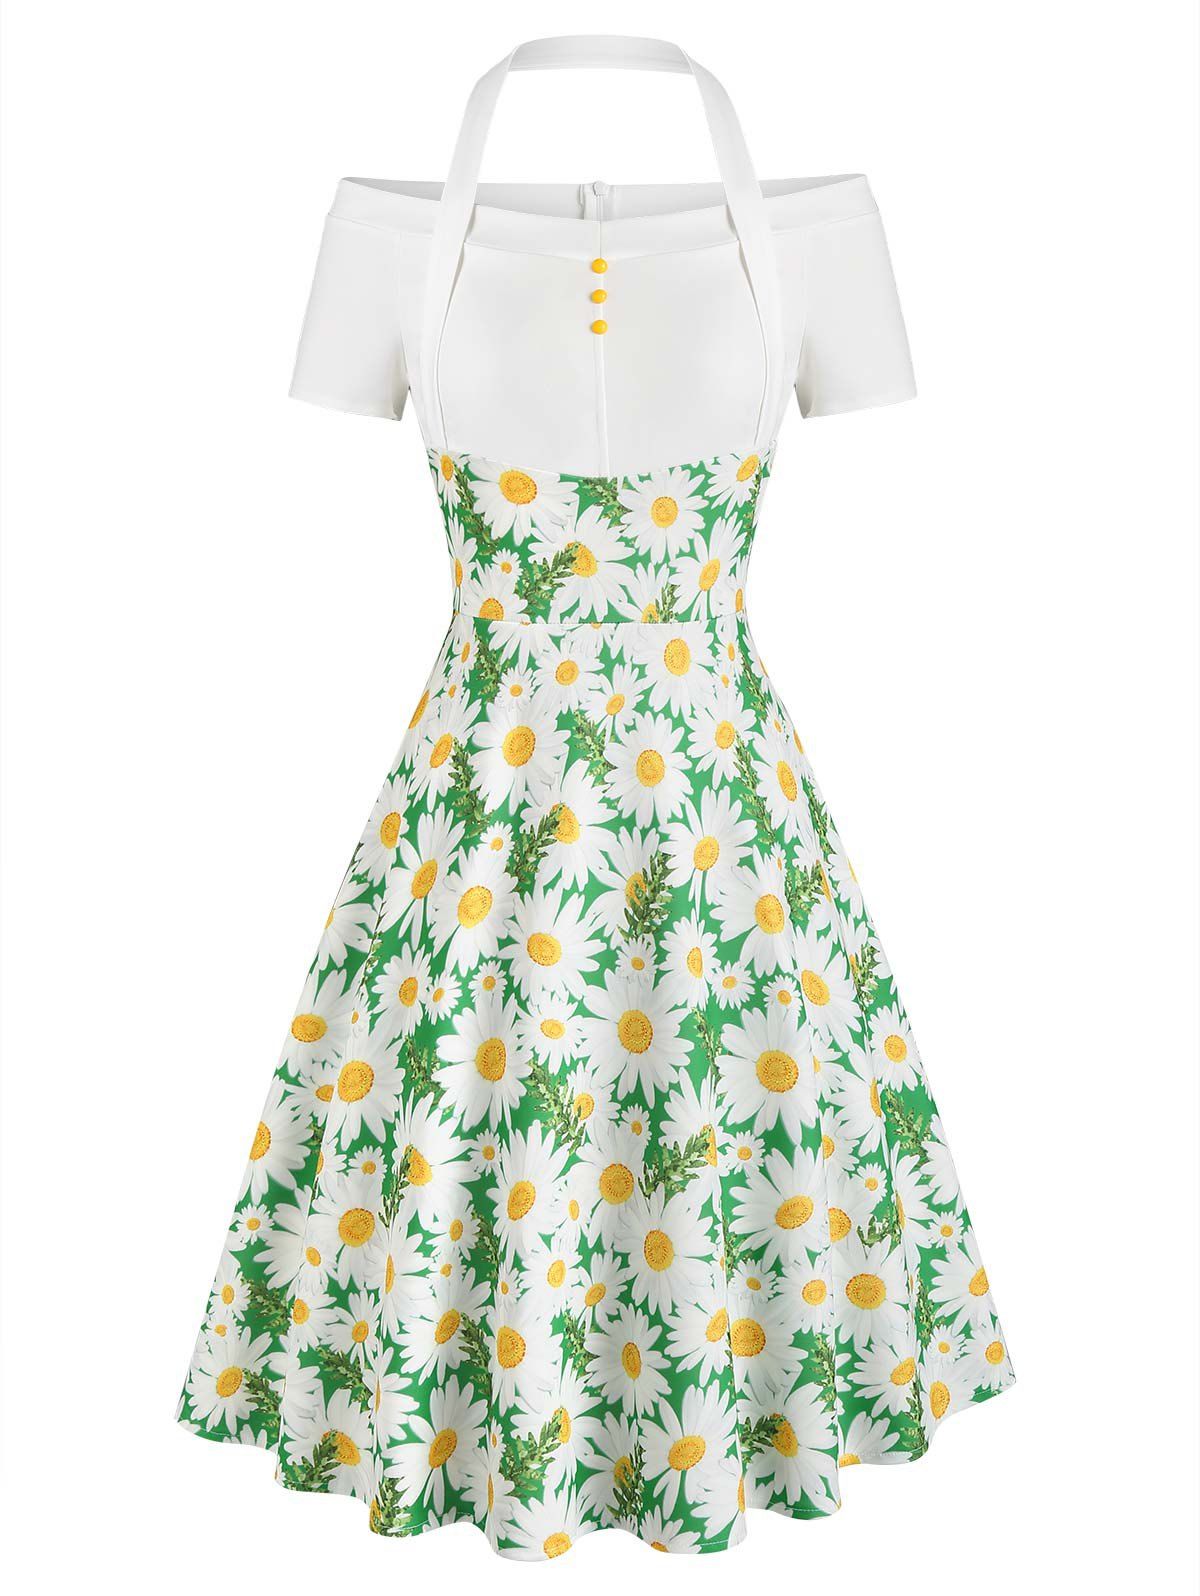 Daisy Floral Halter Off Shoulder A Line Dress - WHITE S